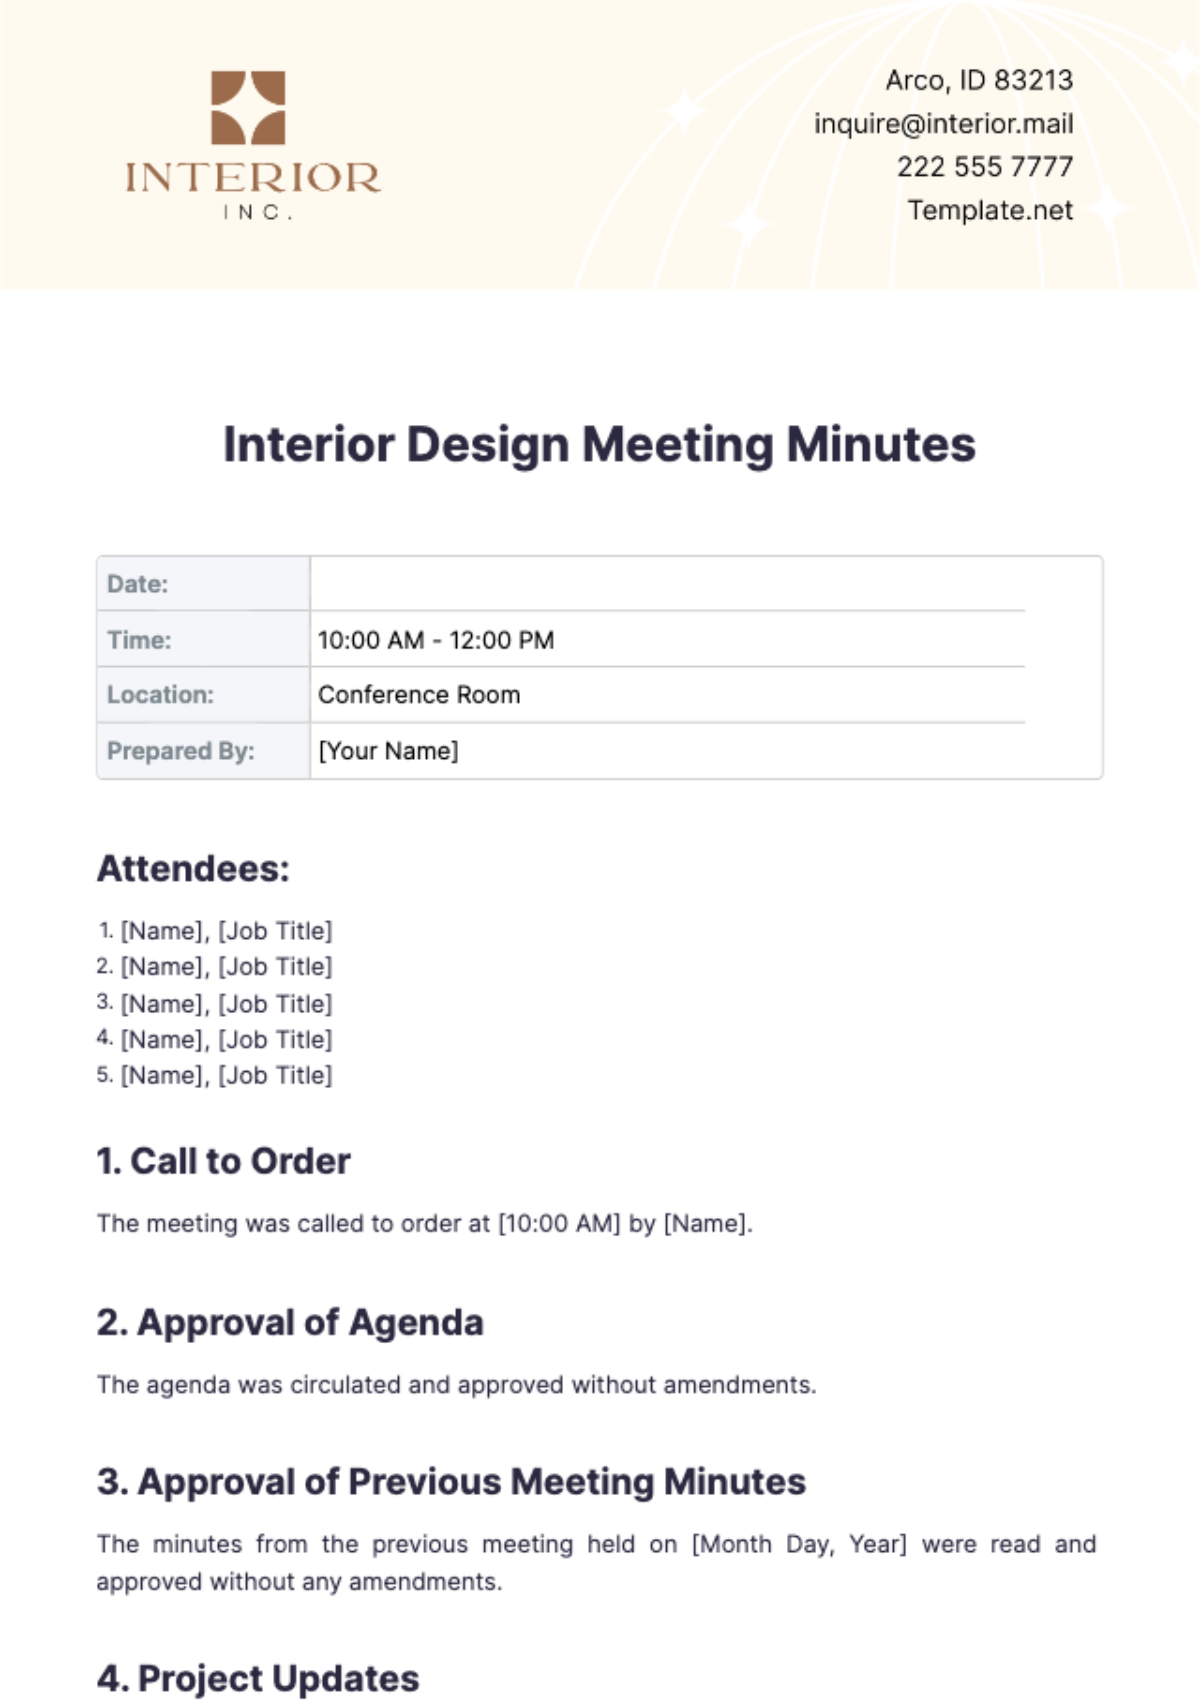 Interior Design Meeting Minutes Template